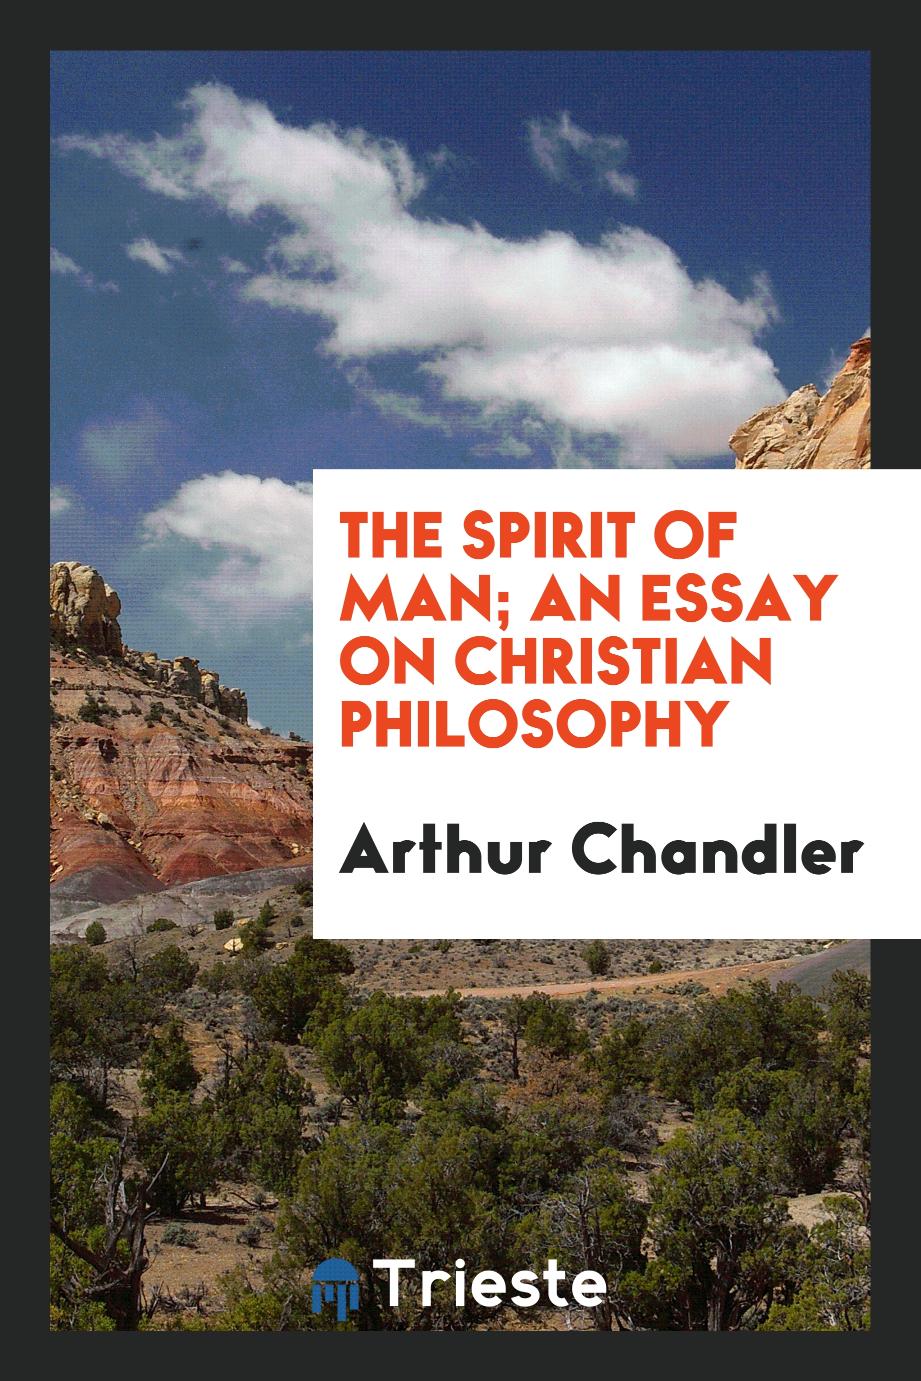 The spirit of man; an essay on Christian philosophy